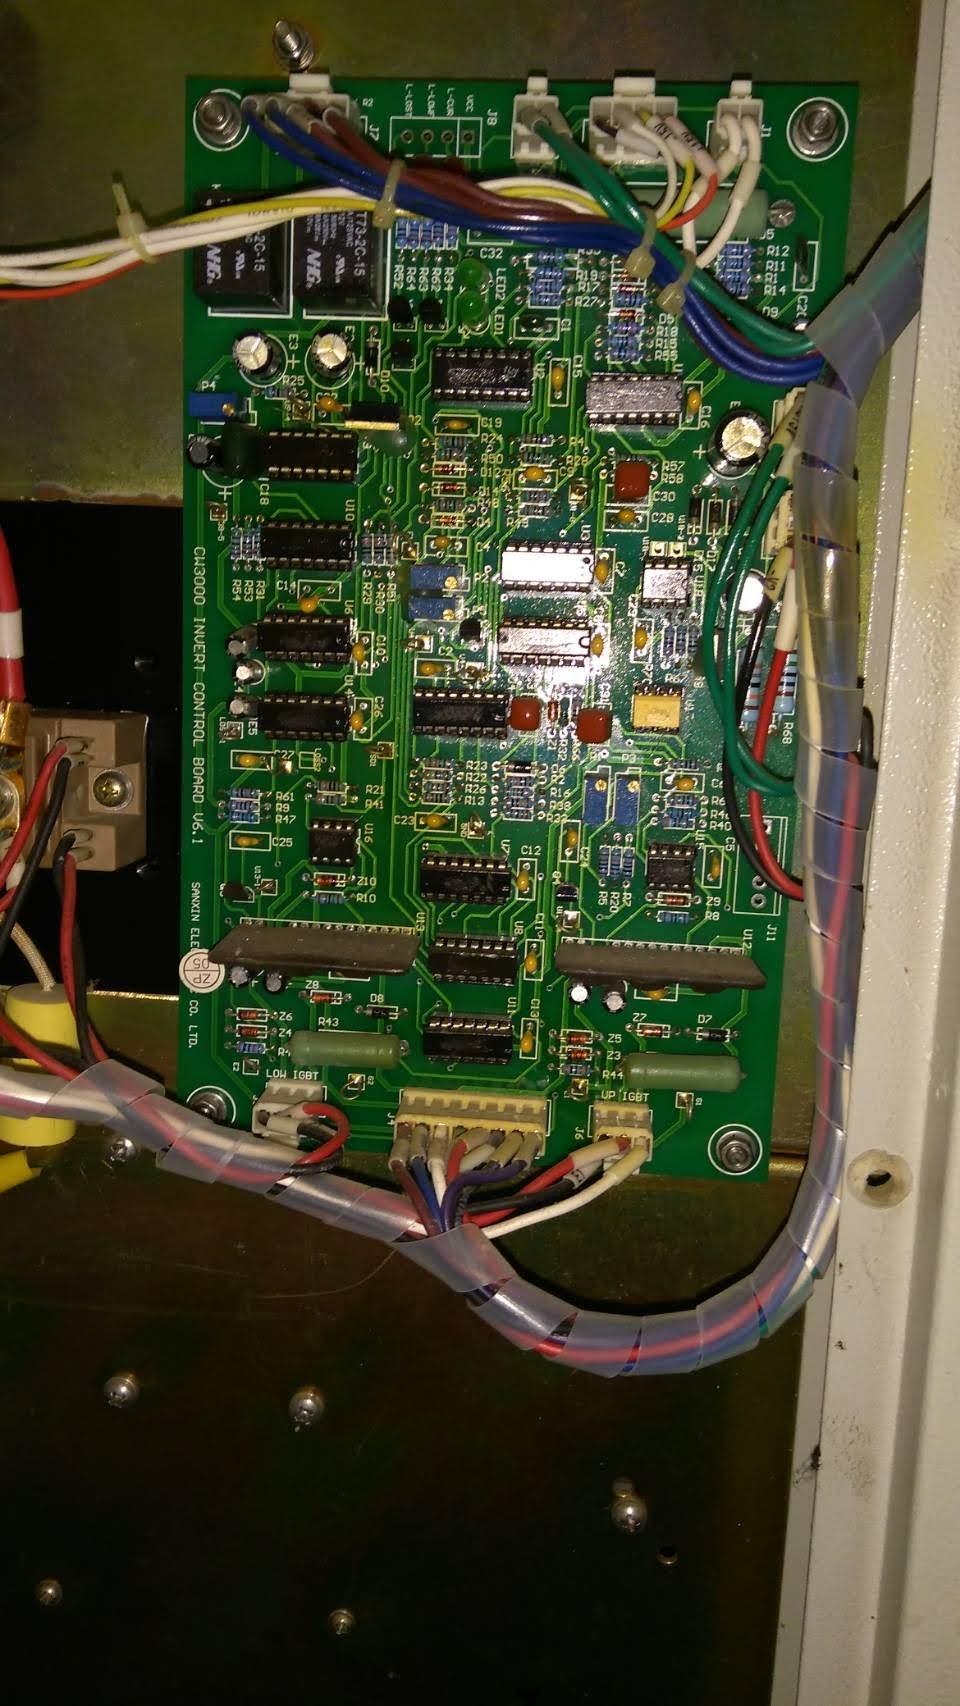 PCB Board  Circuit  Repair ซ่อมแผงบอร์ดวงจรไฟฟ้า ,pcb  board repair  ซ่อมแผงบอร์ด,PNP,NPN, ICS,Industrial Services/Repair and Maintenance